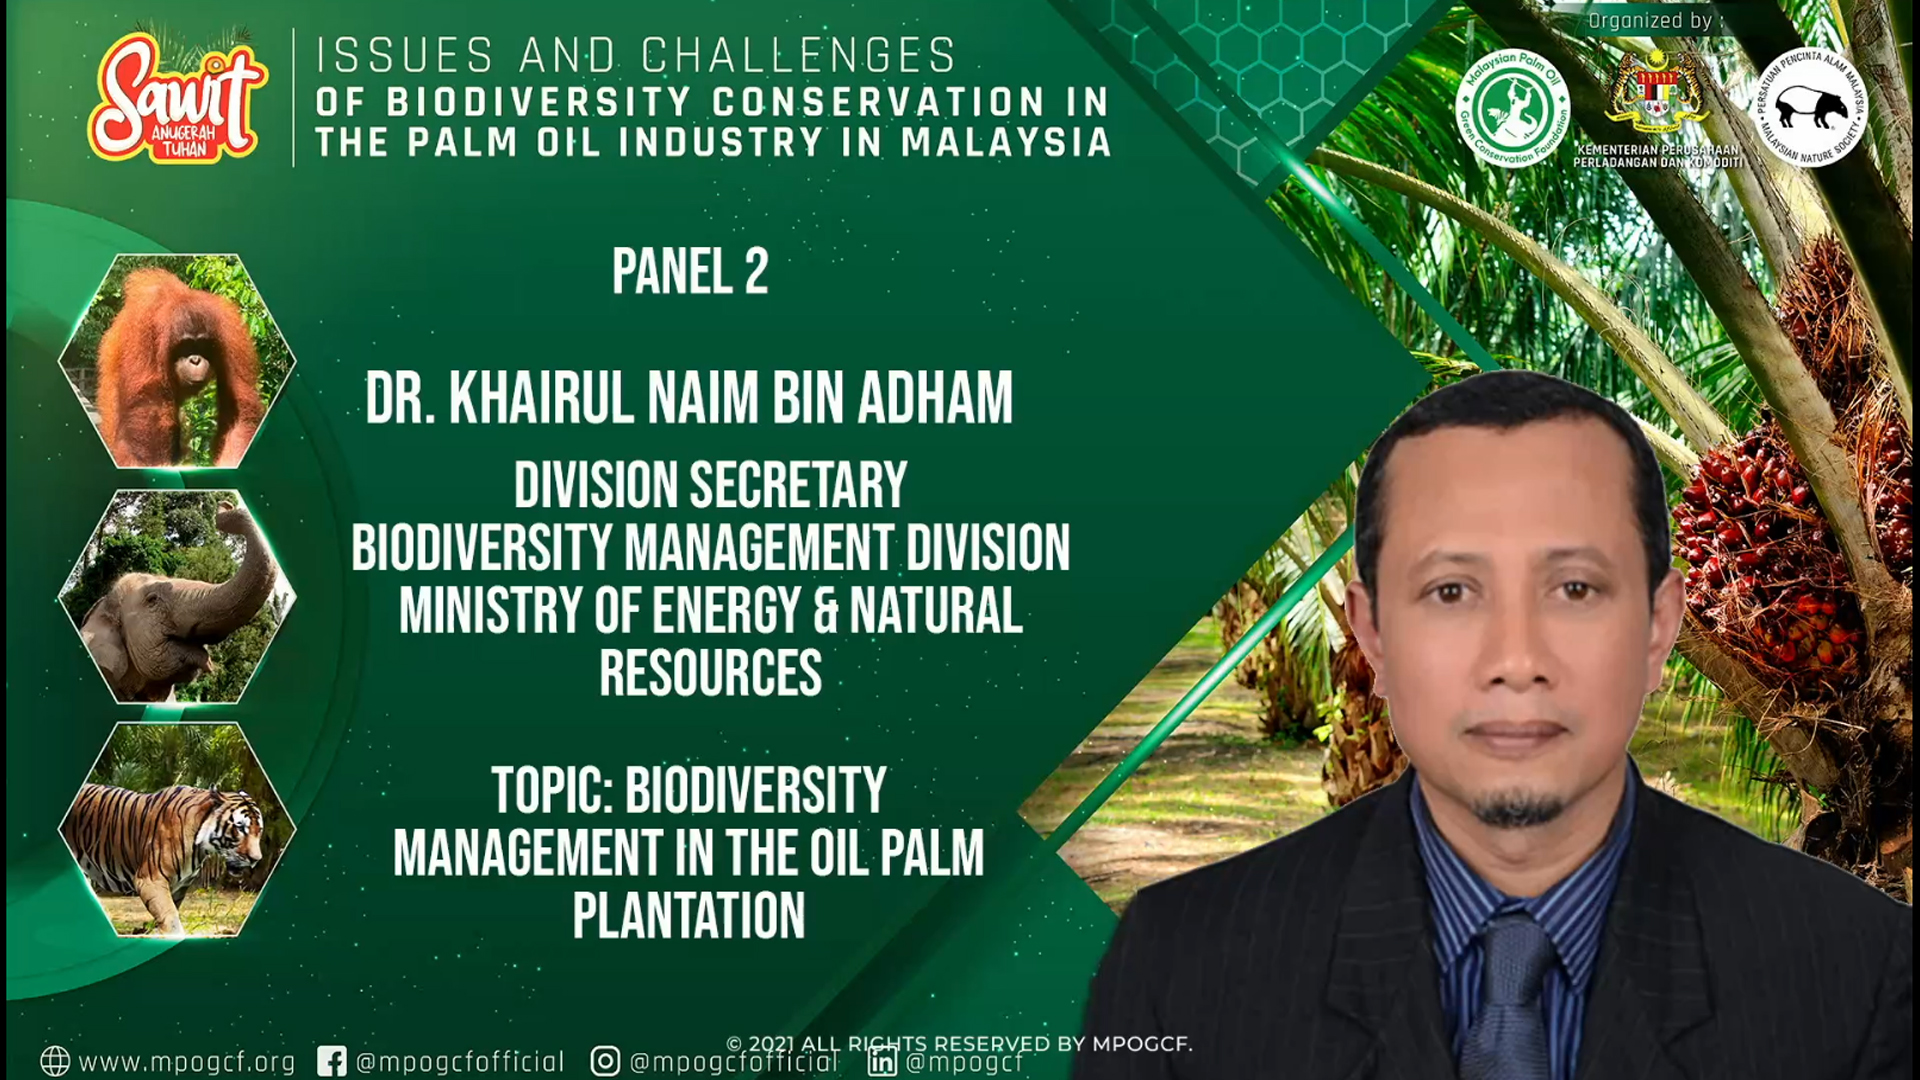 Biodiversity Management In The Oil Palm Plantation by Dr. Khairul Naim Bin Adham